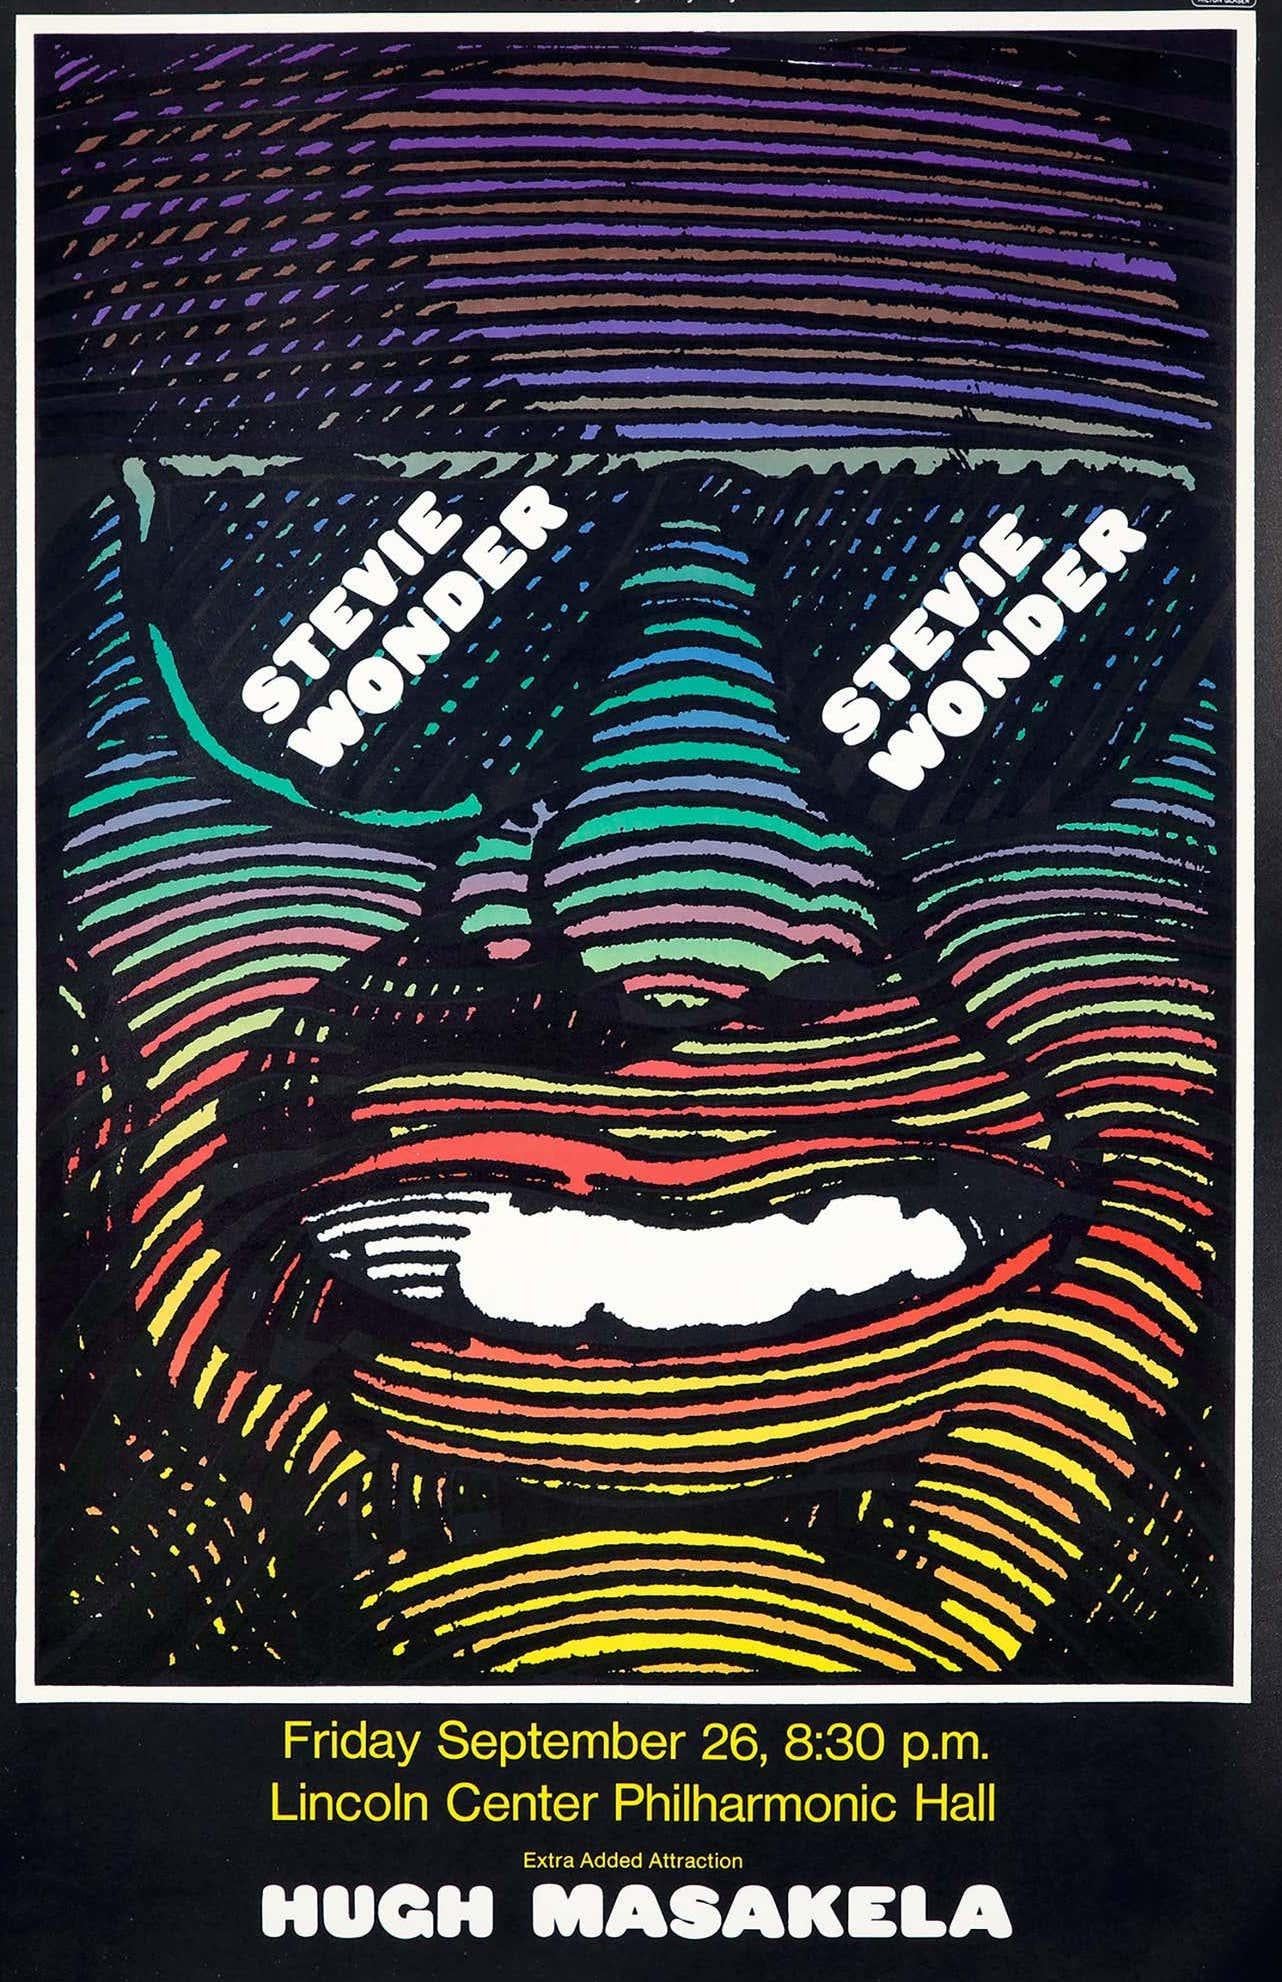 Milton Glaser Poster for Stevie Wonder at New York's Philharmonic Hall, 1968: 
Vintage original 1968 Milton Glaser Stevie Wonder concert poster designed by the legendary designer for a concert featuring Stevie Wonder and Hugh Masakela at New York